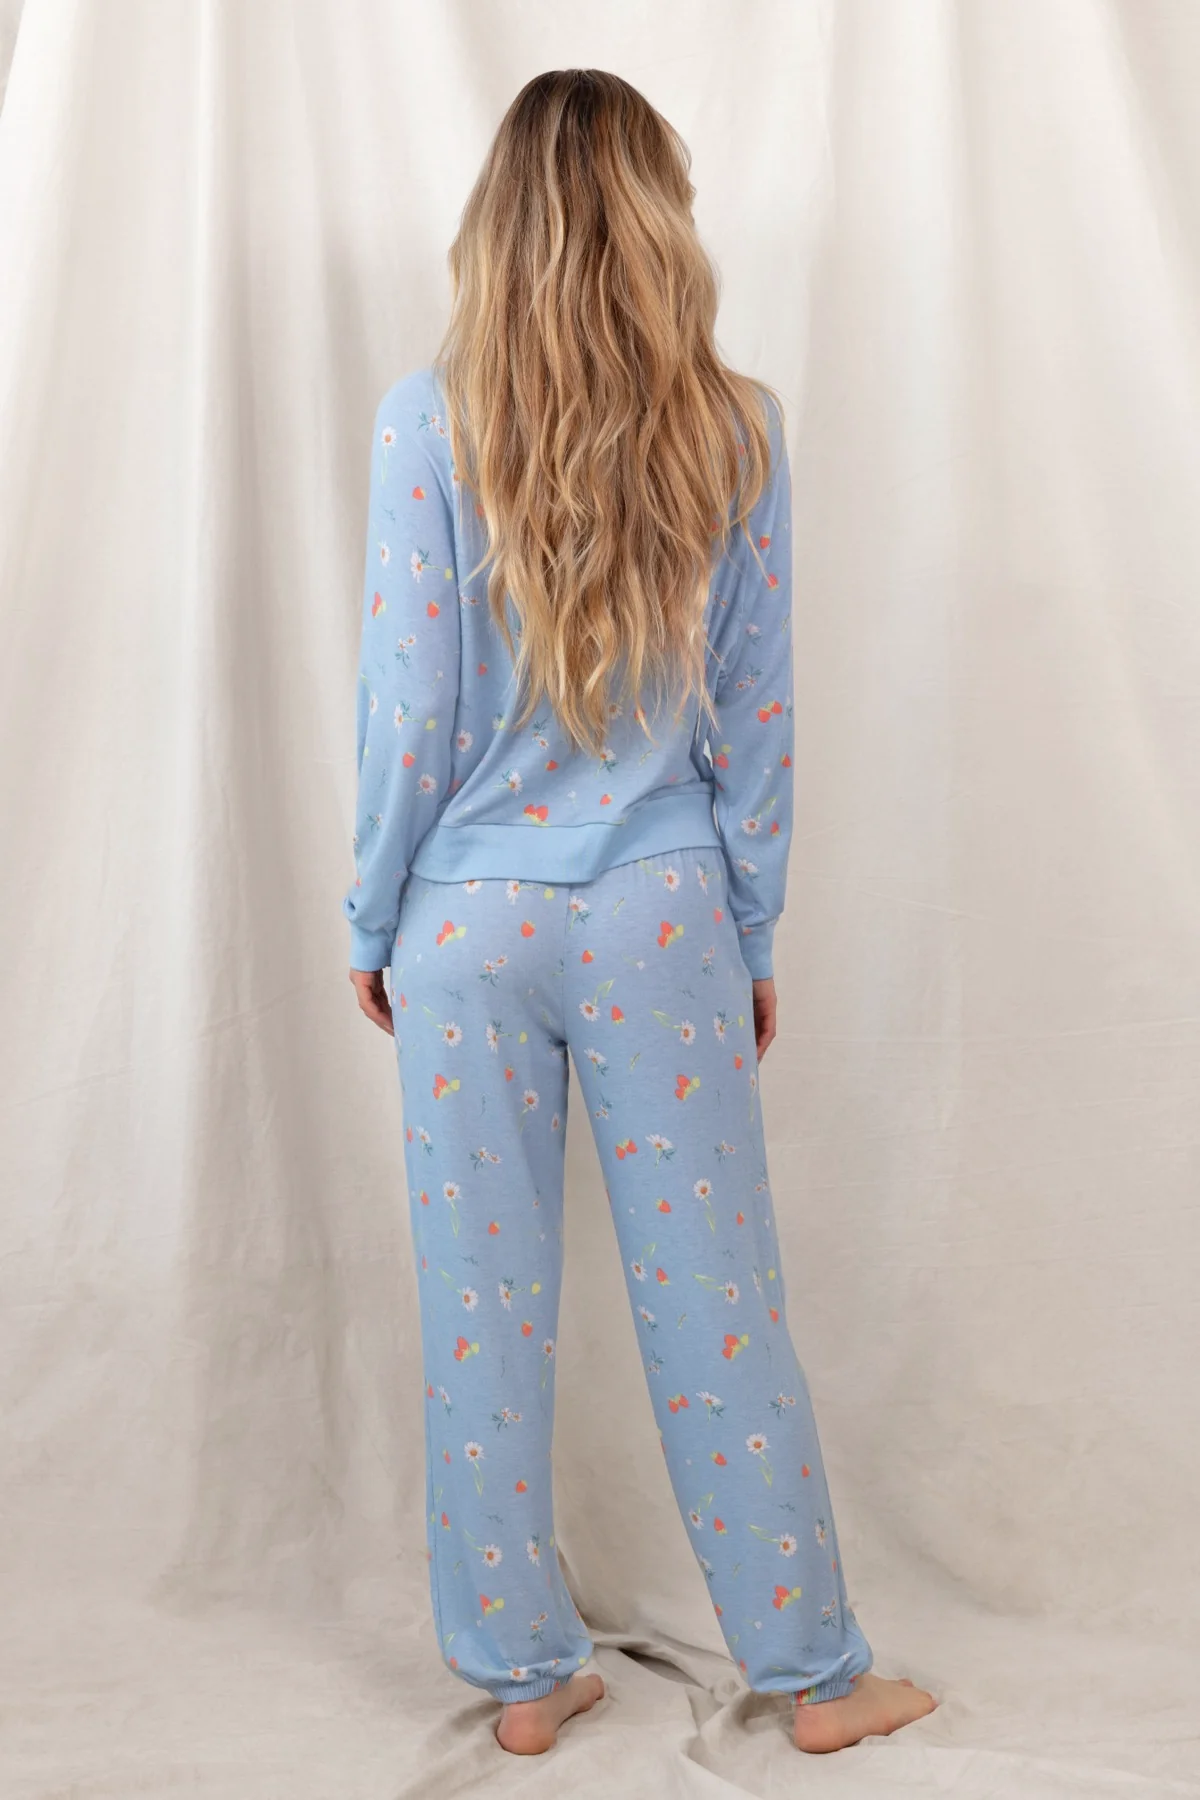 Honeydew Star Seeker Set - Pisces Berries Sleepwear - Pajamas by Honeydew | Grace the Boutique